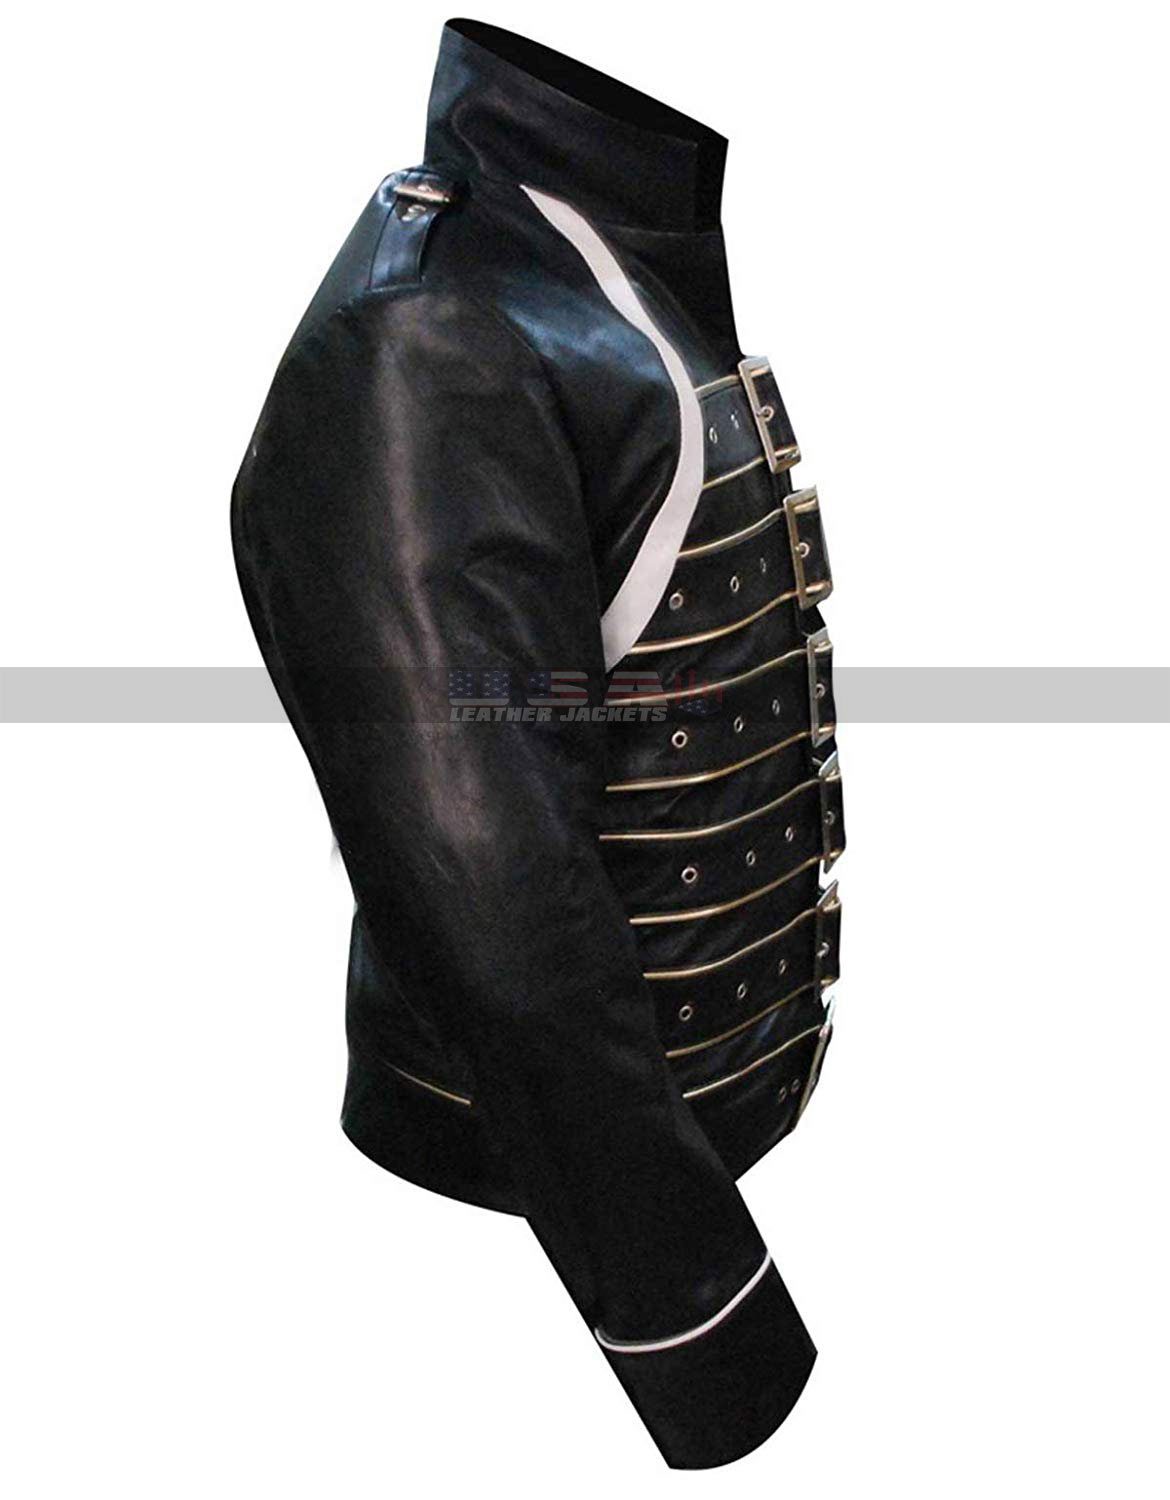 Freddie Mercury Black Leather Jacket